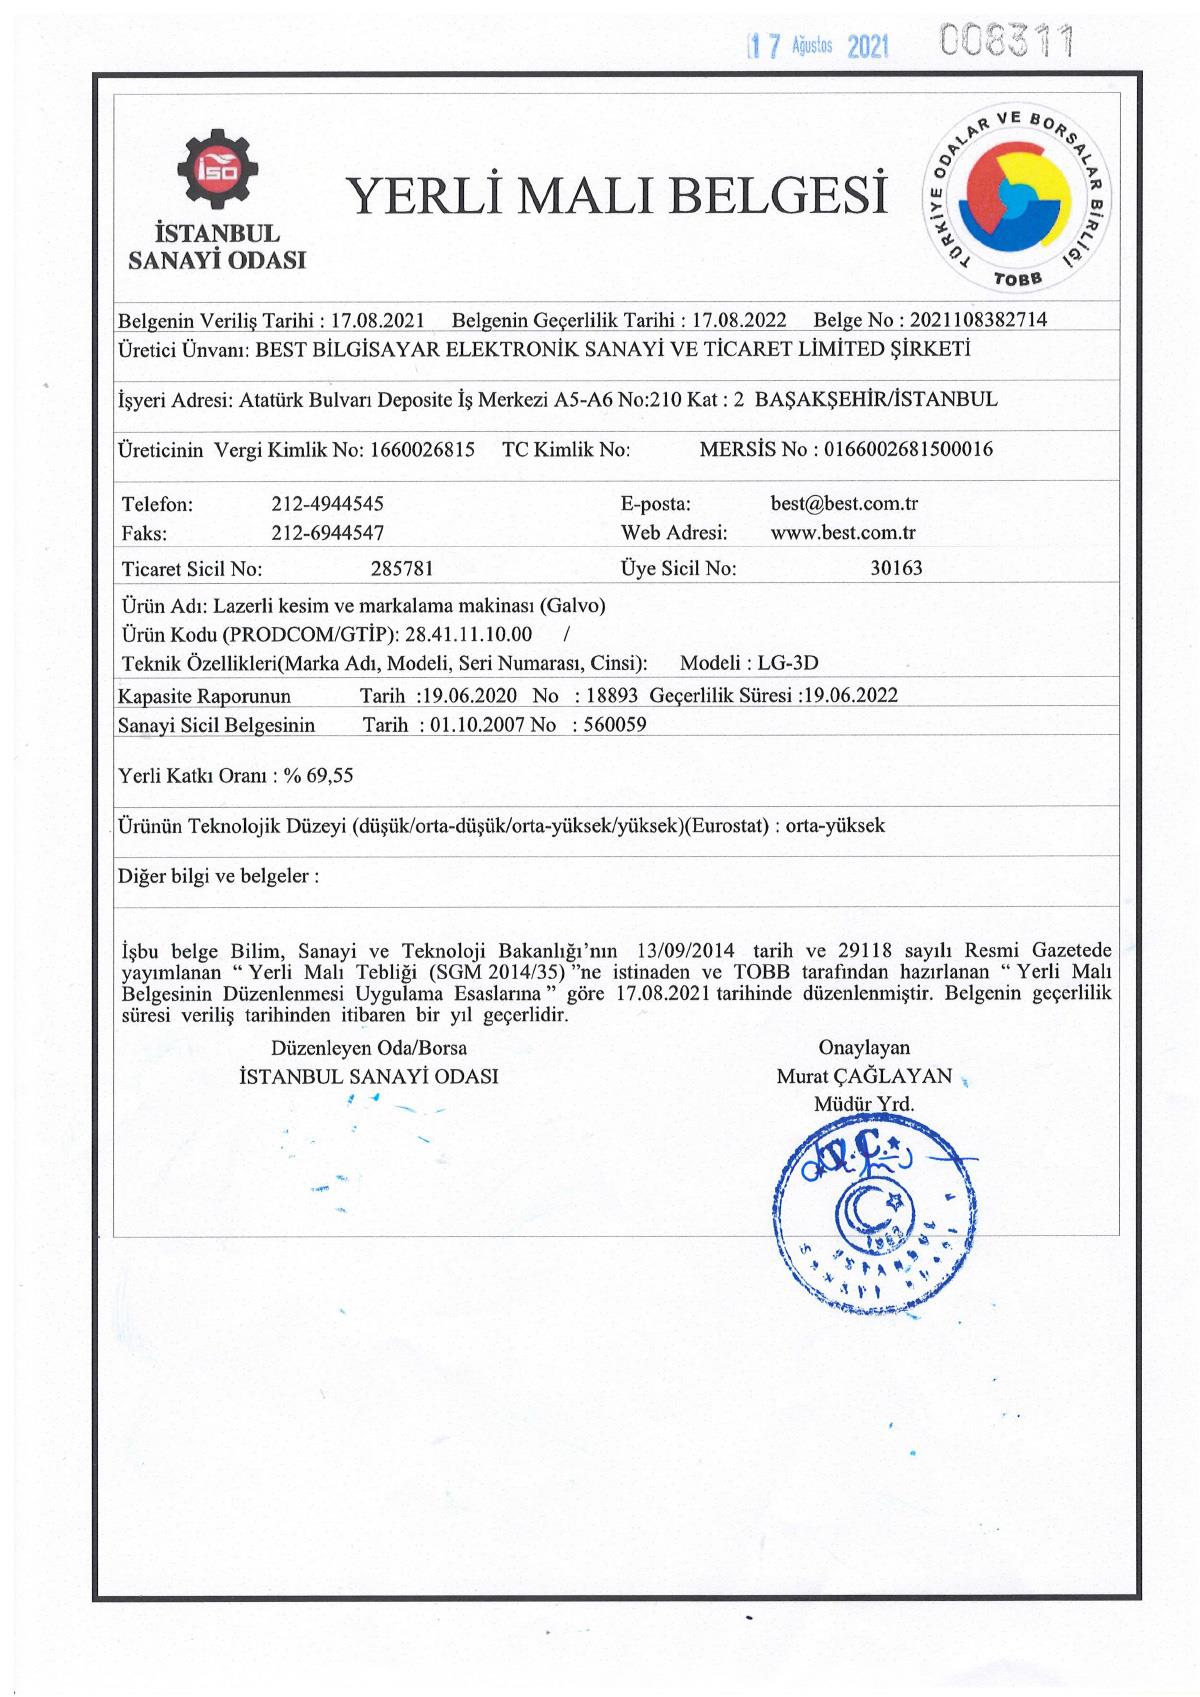 Domestic Goods
Certificate